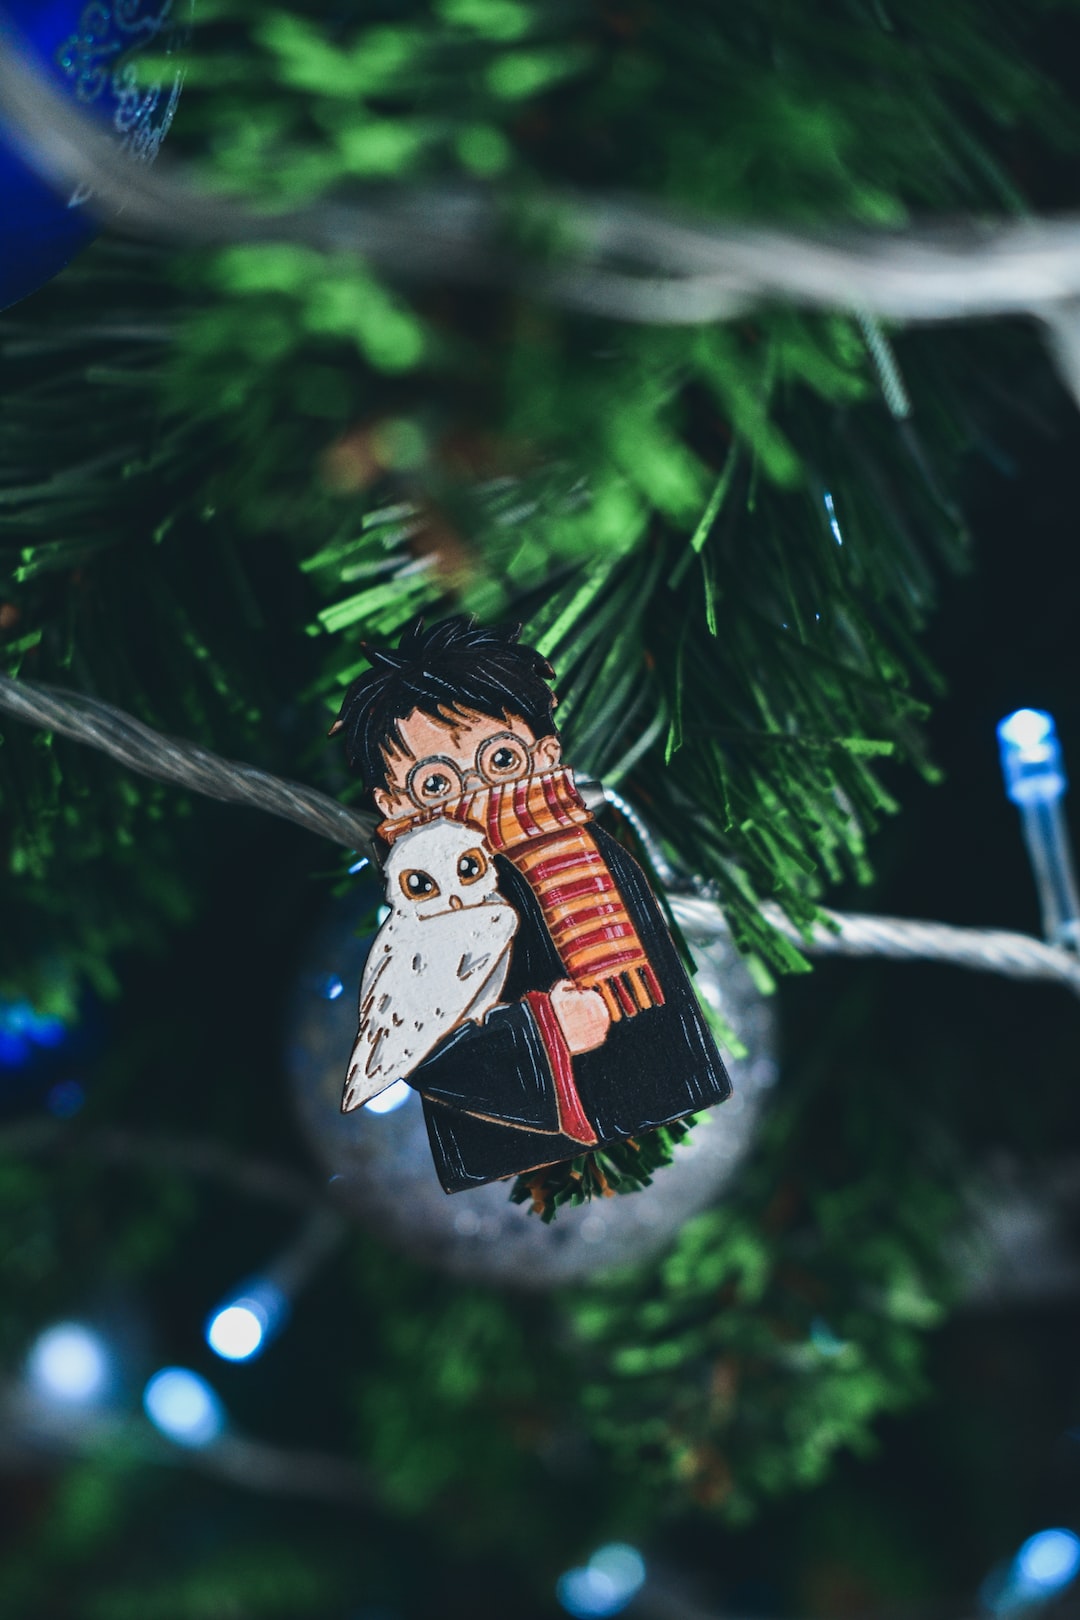 Harry Potter and Christmas tree.